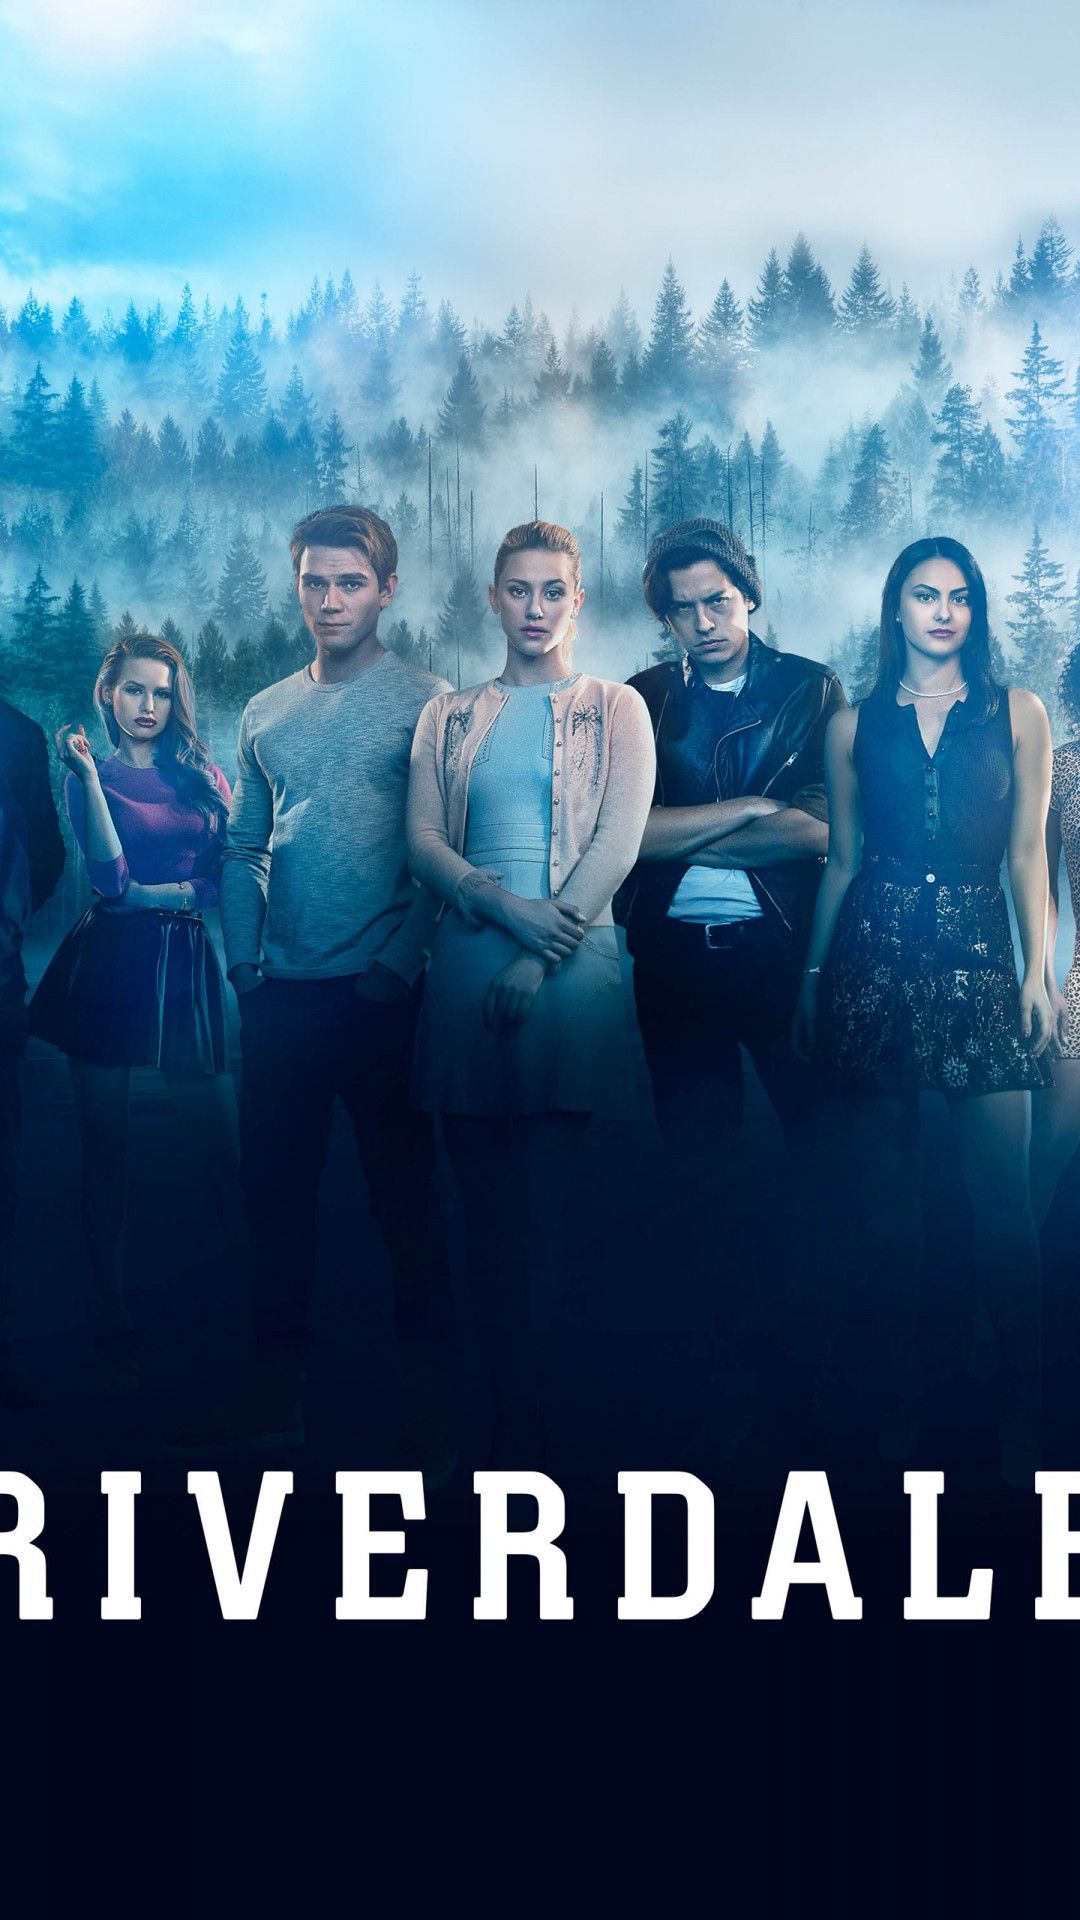 Riverdale Season 3 Fondos de pantalla | HD Wallpapers | ID # 26304